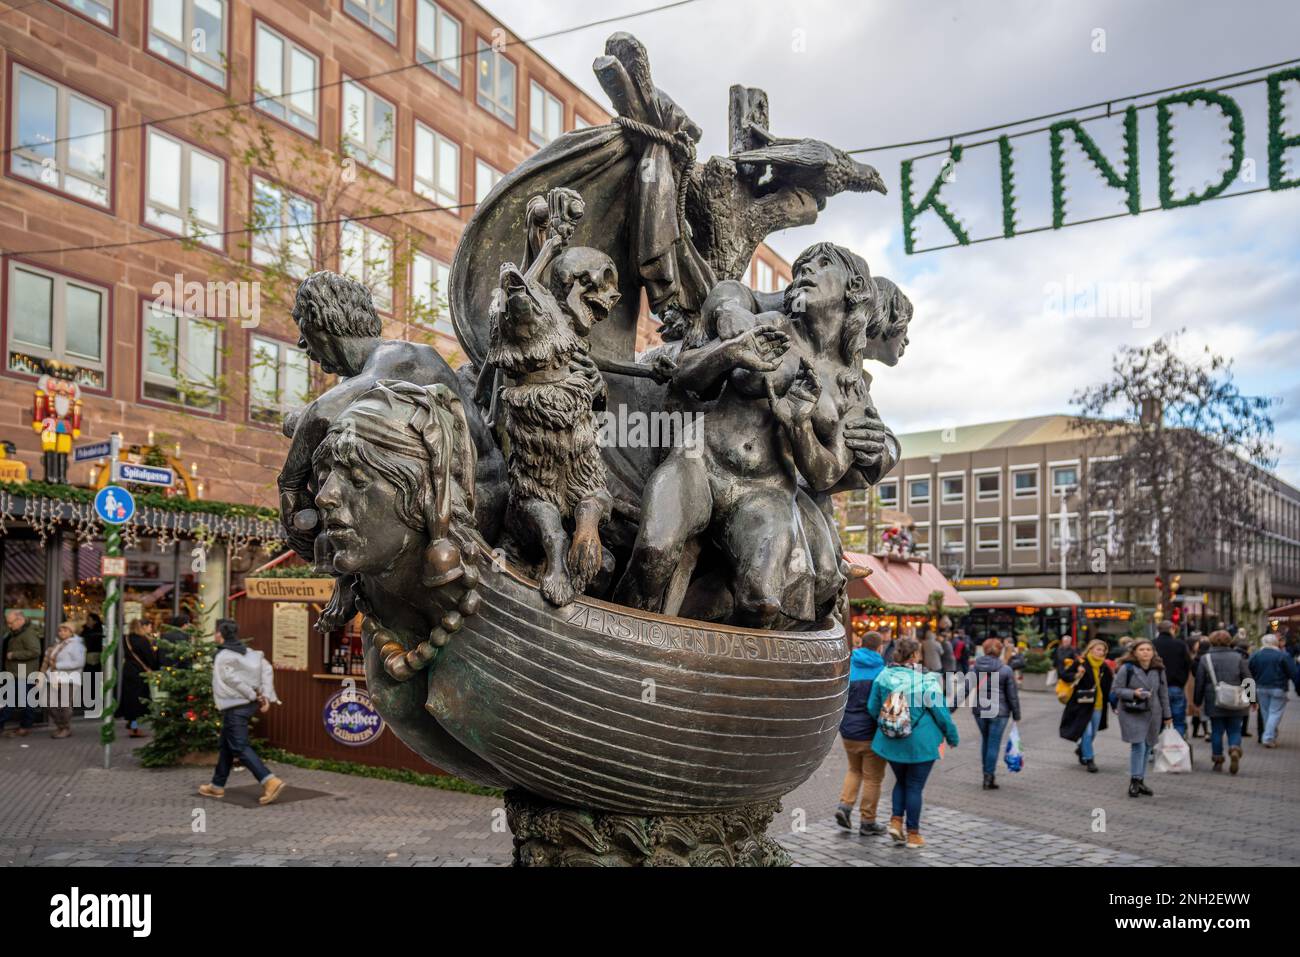 Ship of Fools (Das Narrenschiff) Sculpture - Nuremberg, Bavaria, Germany Stock Photo